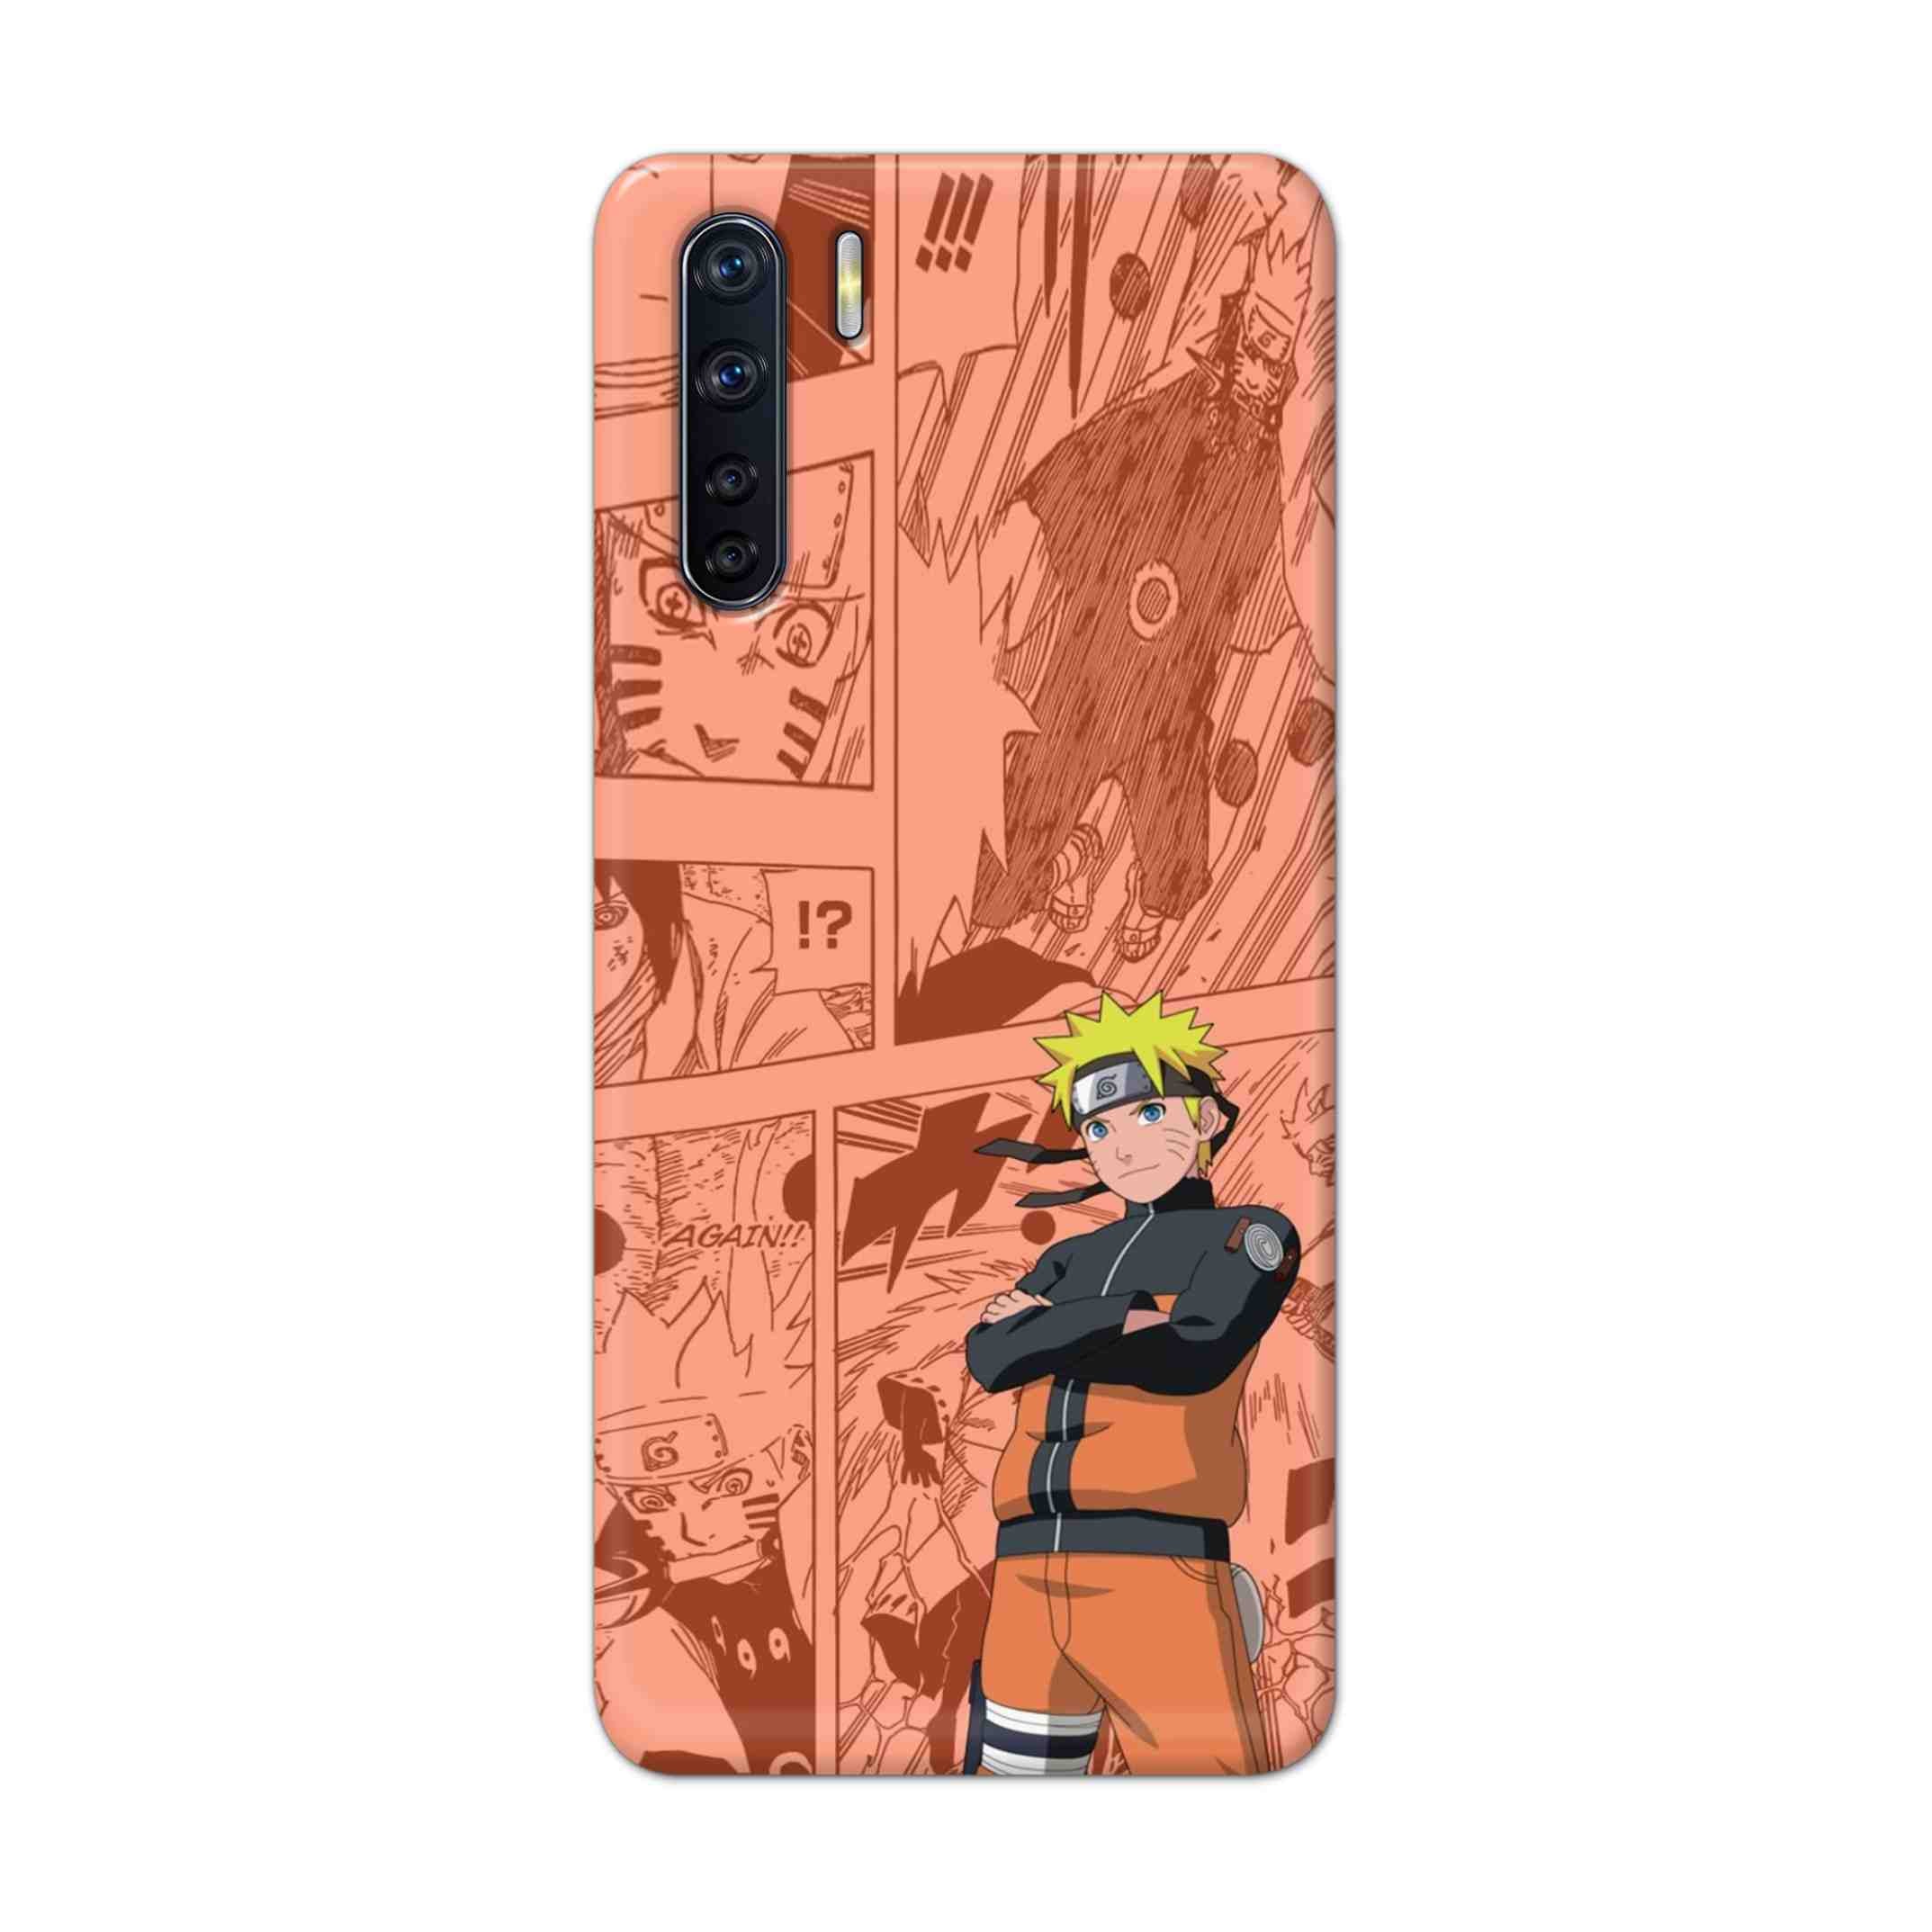 Buy Naruto Hard Back Mobile Phone Case Cover For OPPO F15 Online